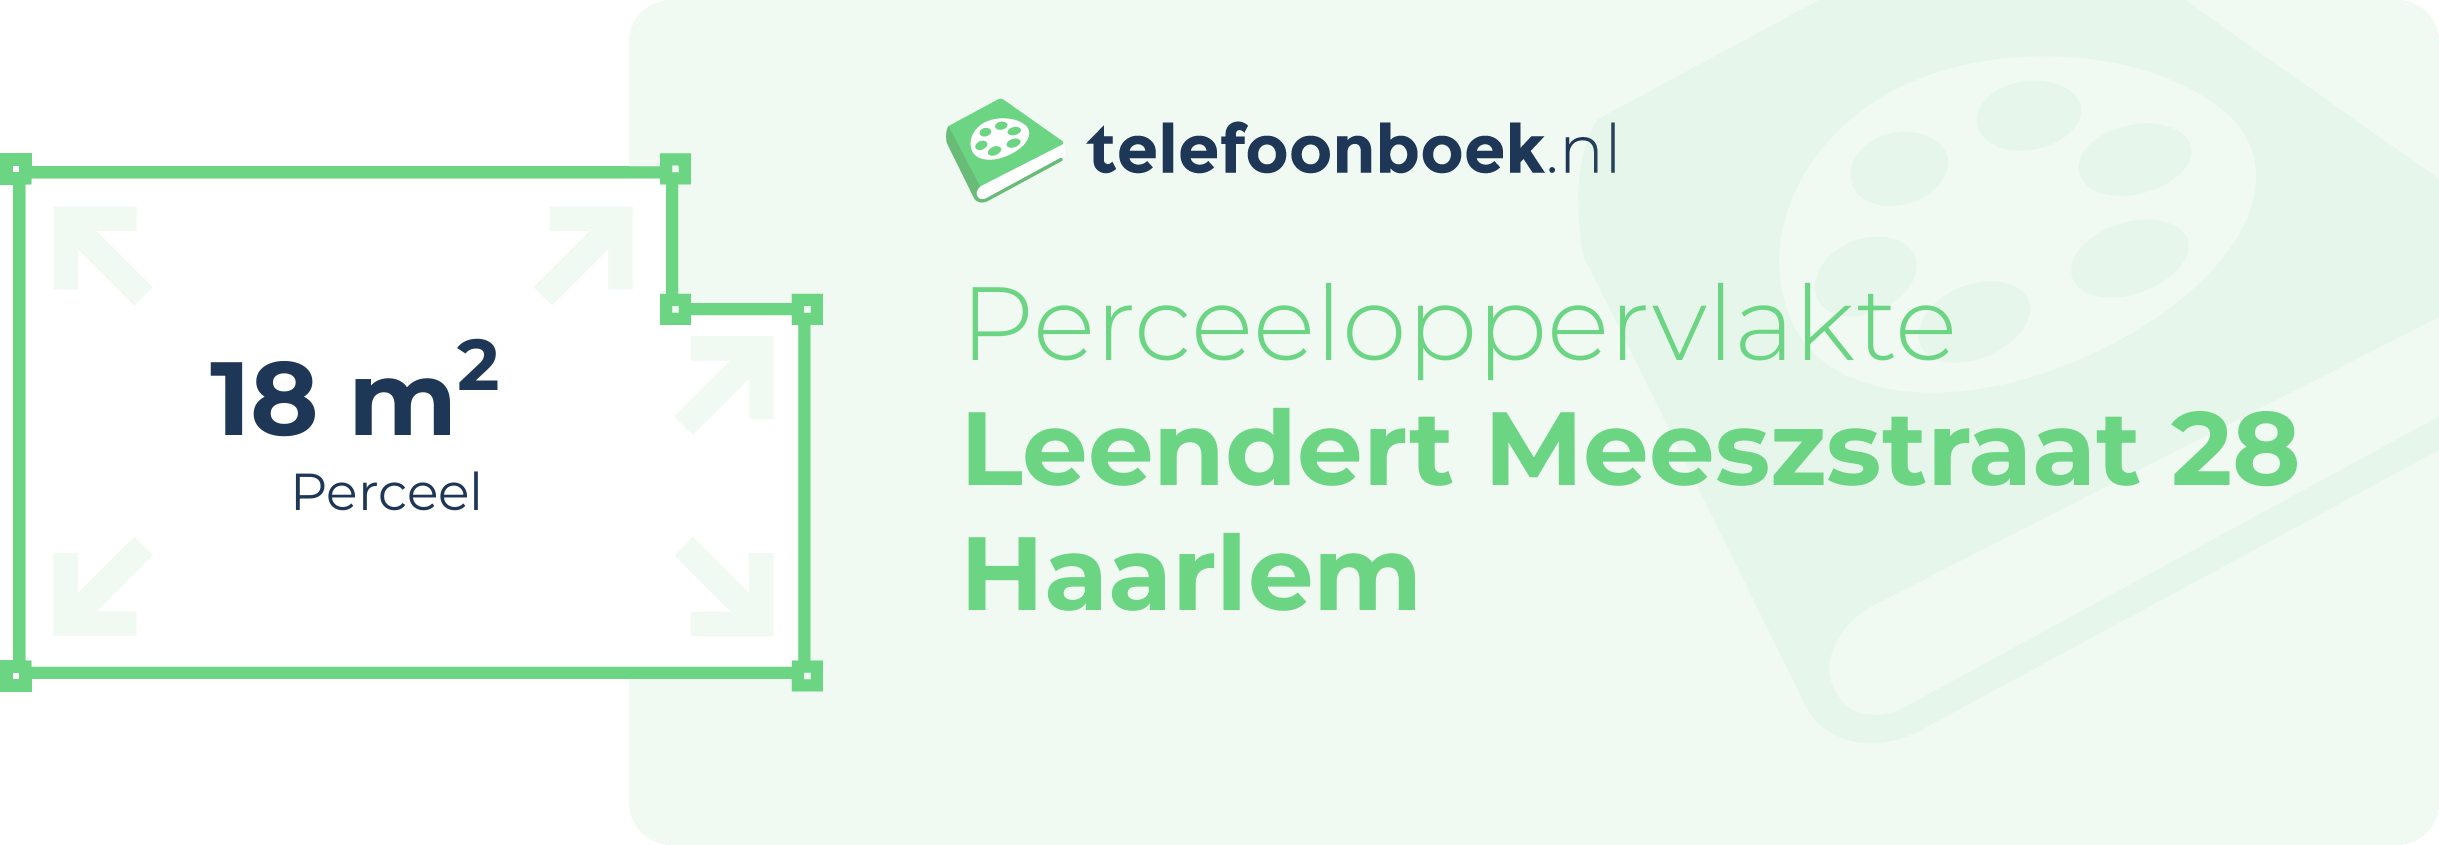 Perceeloppervlakte Leendert Meeszstraat 28 Haarlem